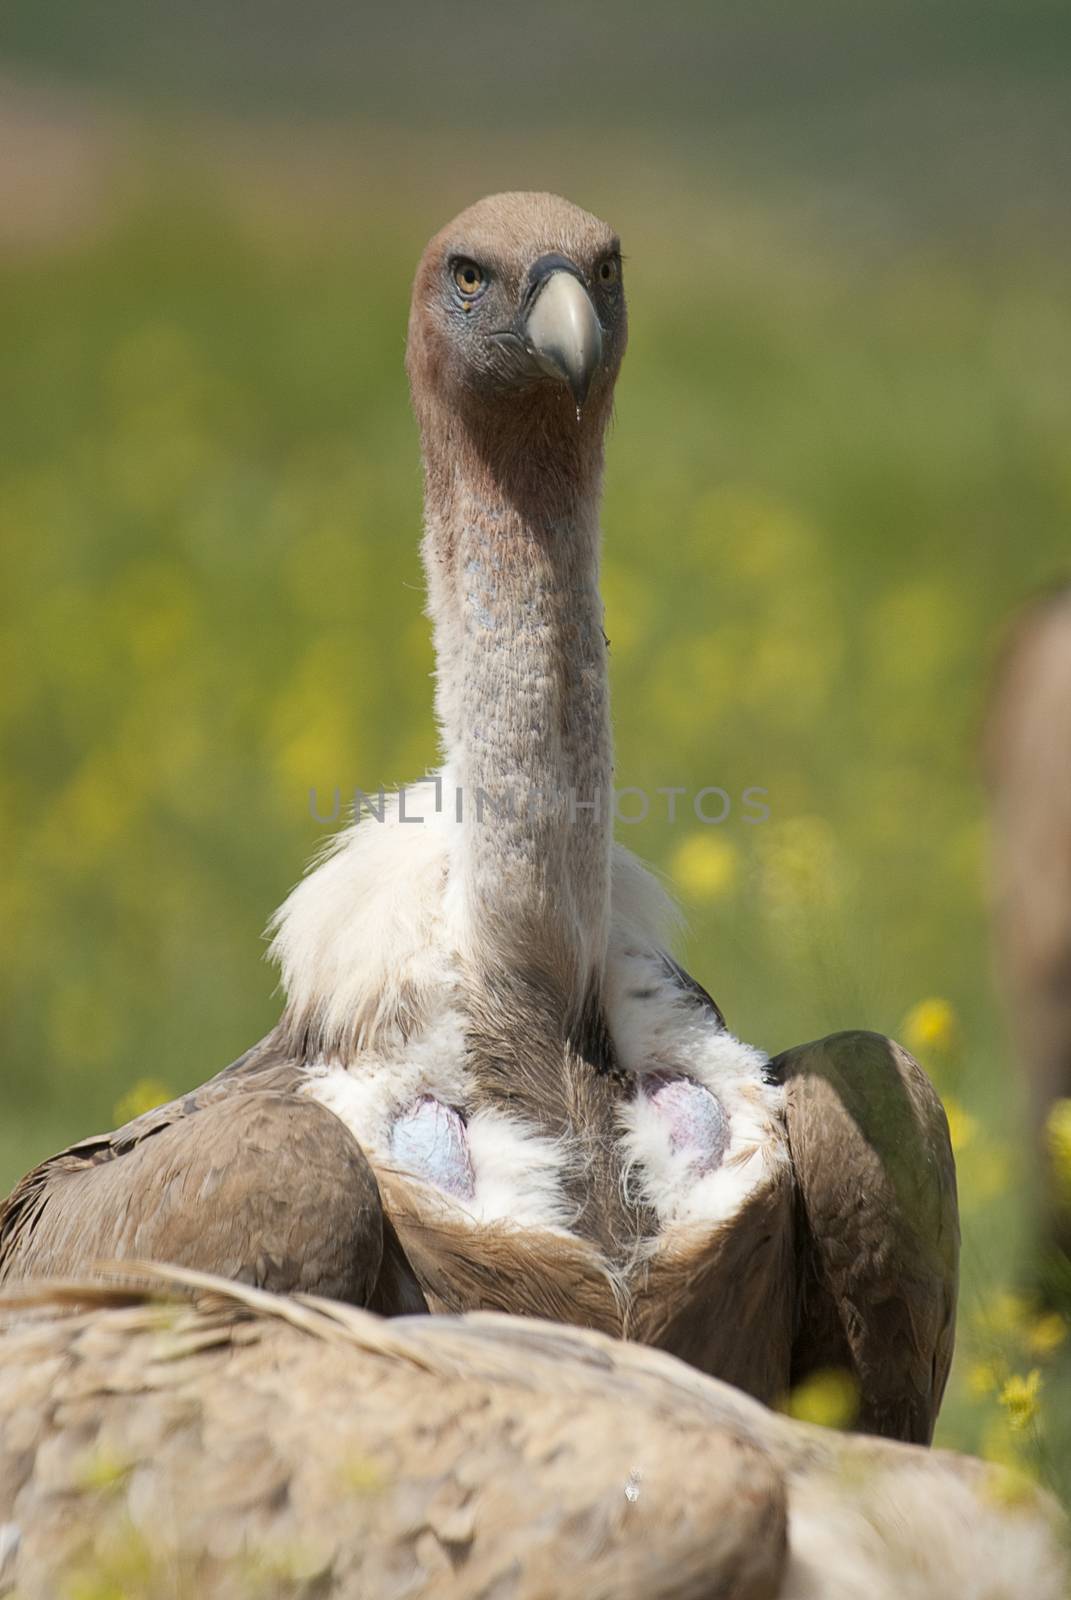 Griffon Vulture (Gyps fulvus) close-up, eyes and beak by jalonsohu@gmail.com